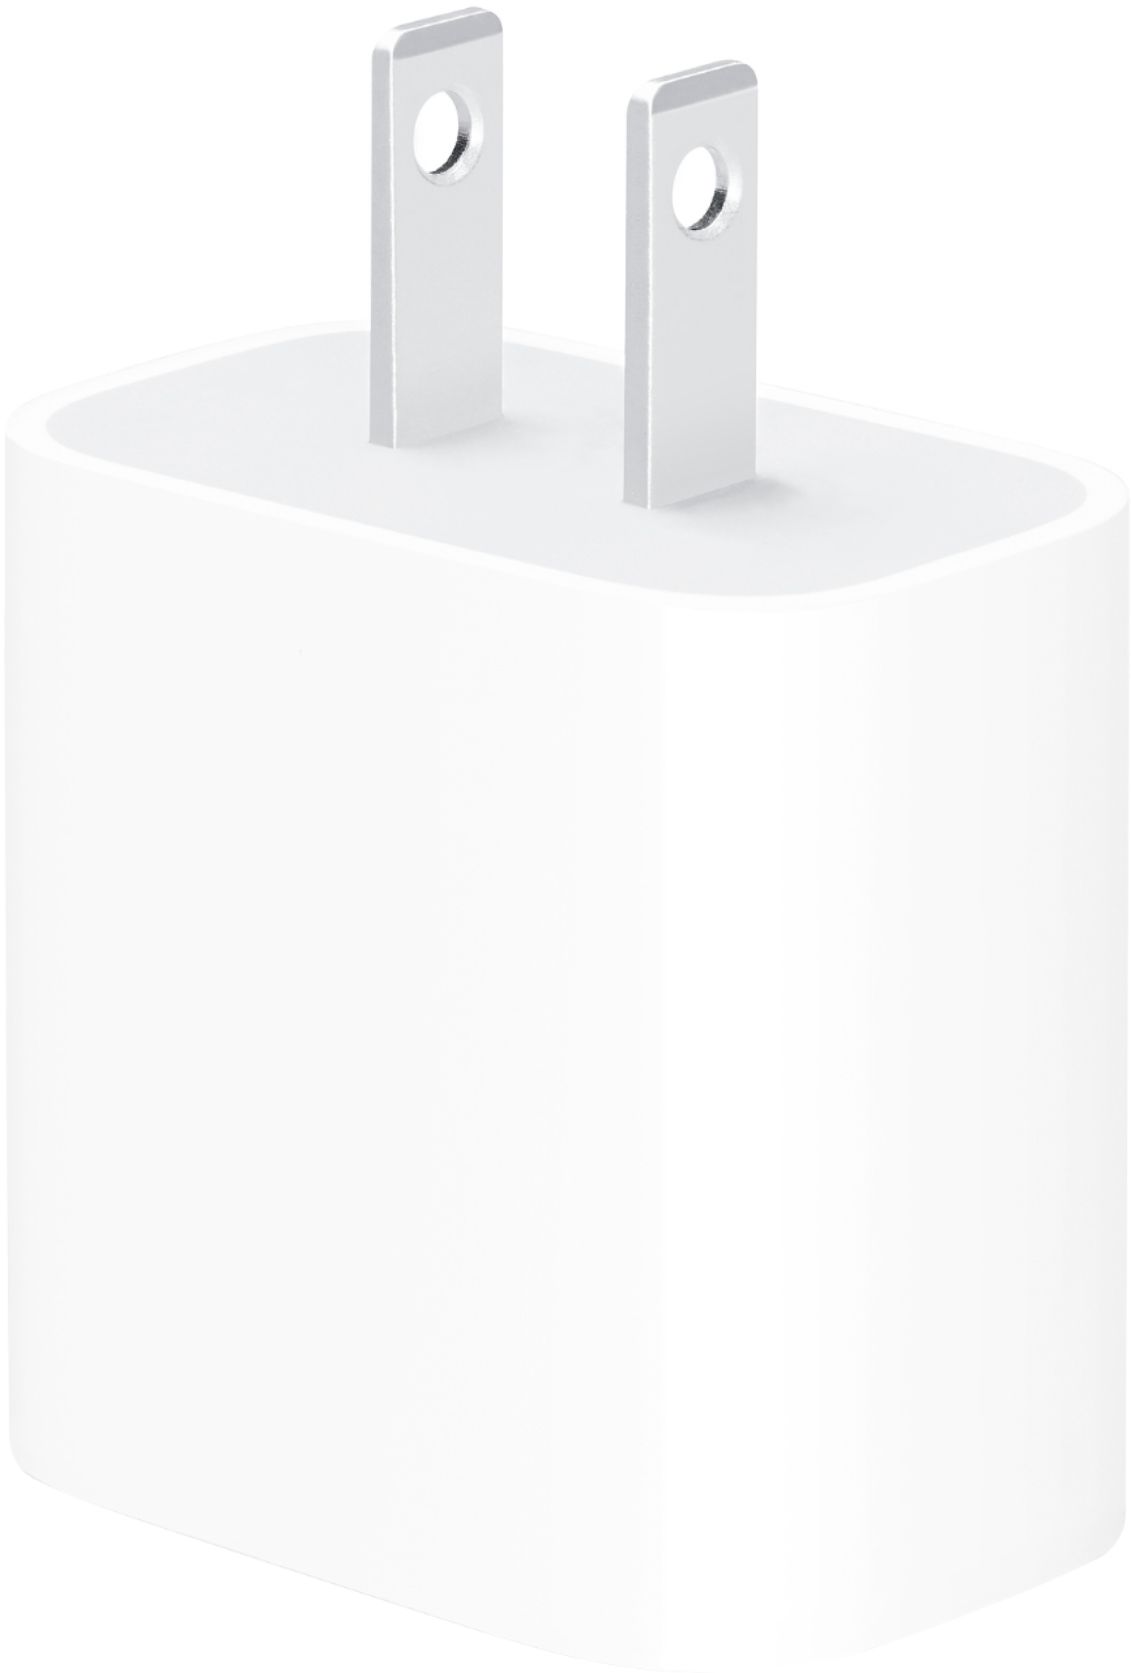 Apple - 20W USB-C Power Adapter - White Model:MHJA3AM/A I Phone